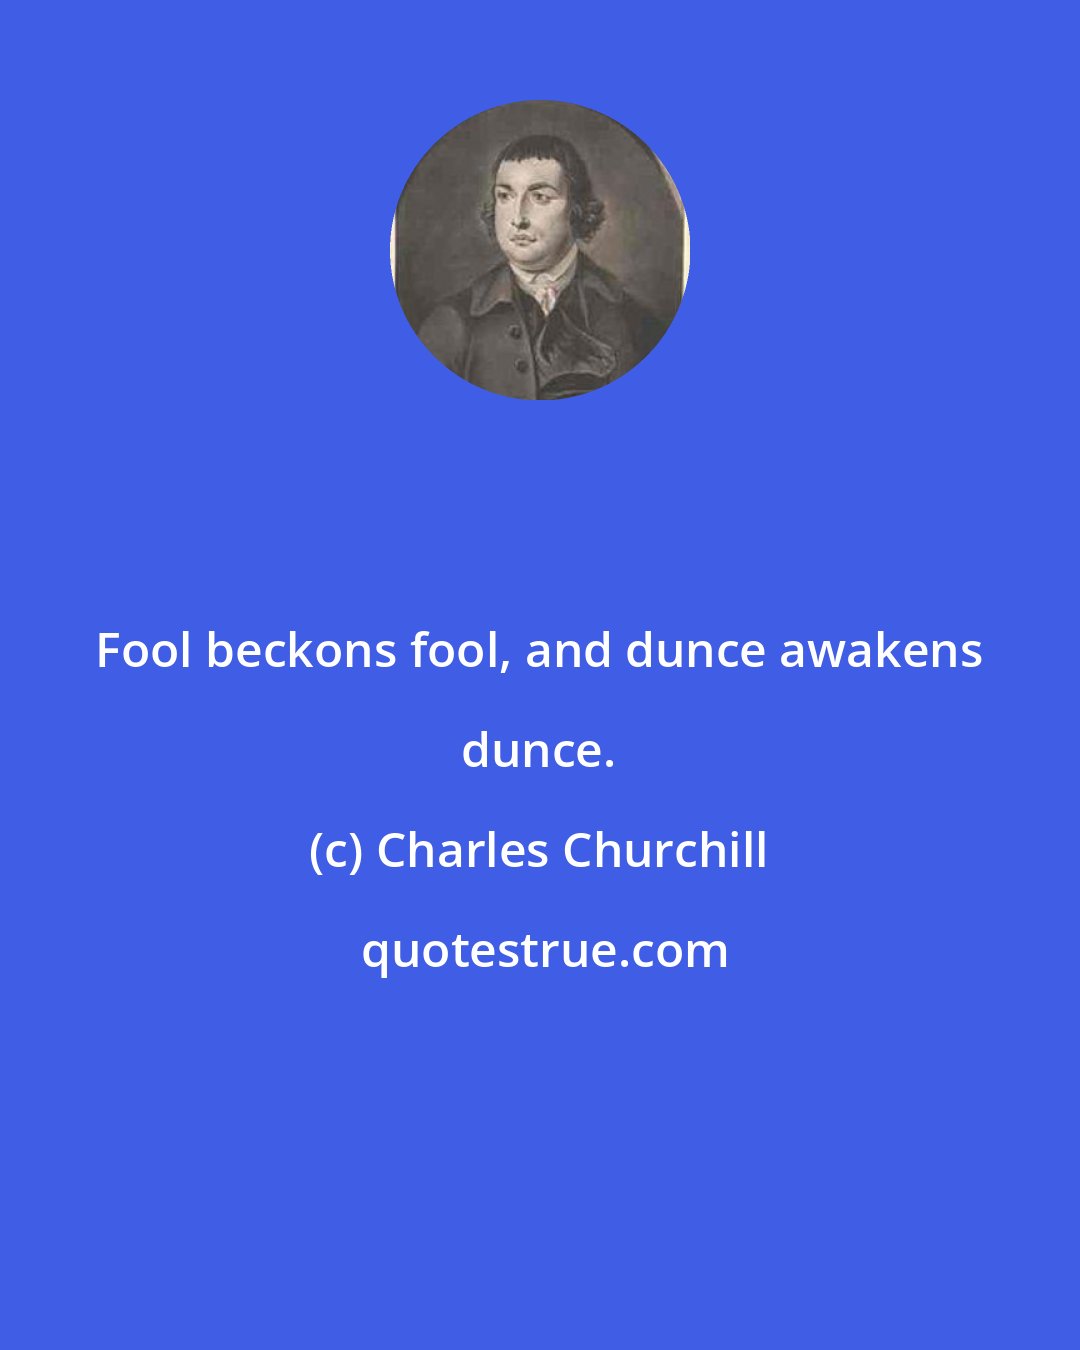 Charles Churchill: Fool beckons fool, and dunce awakens dunce.